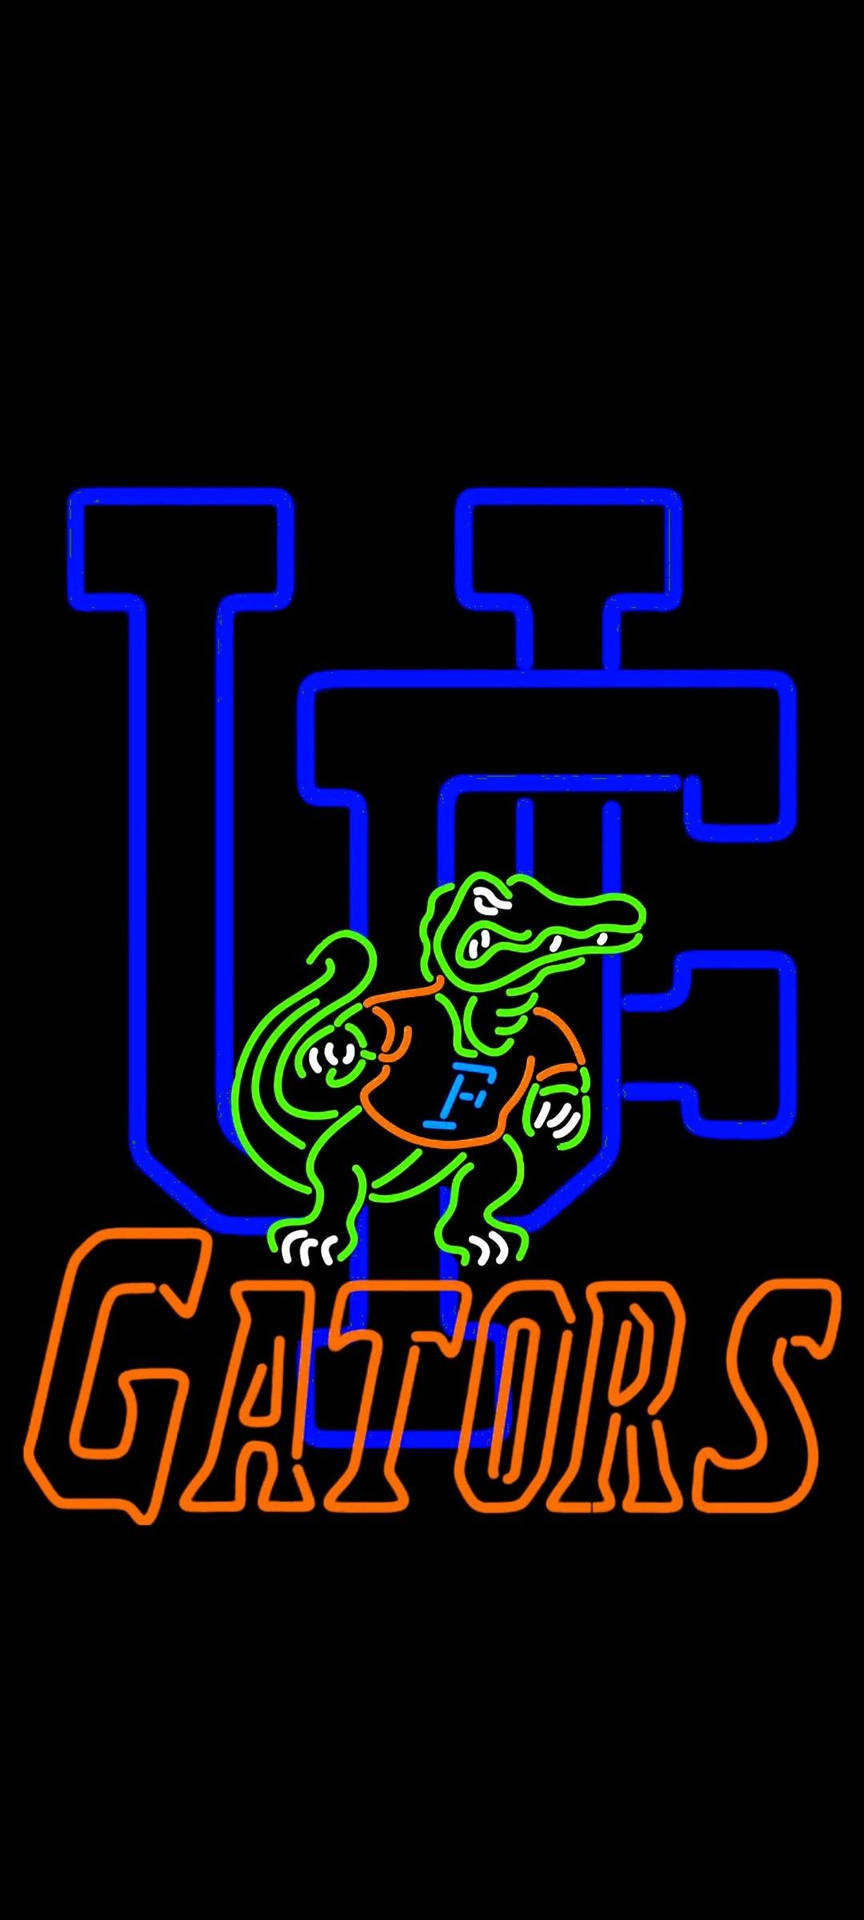 Universityof Florida Gators Neonlichter Wallpaper